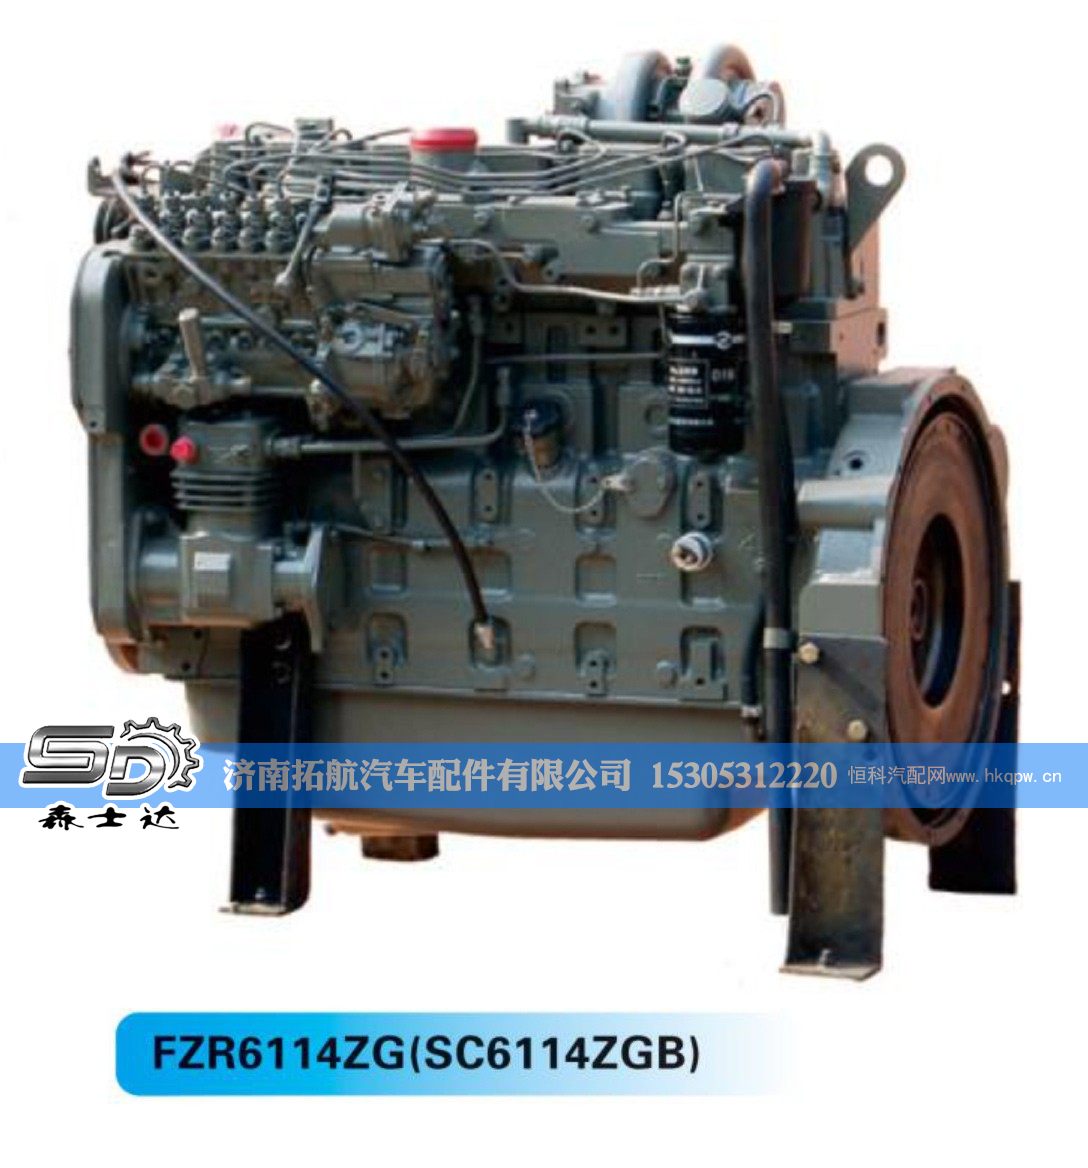 FZR6114ZG(SC6114ZGB),FZR6114ZG(SC6114ZGB)装载机系列,济南拓航汽车配件有限公司